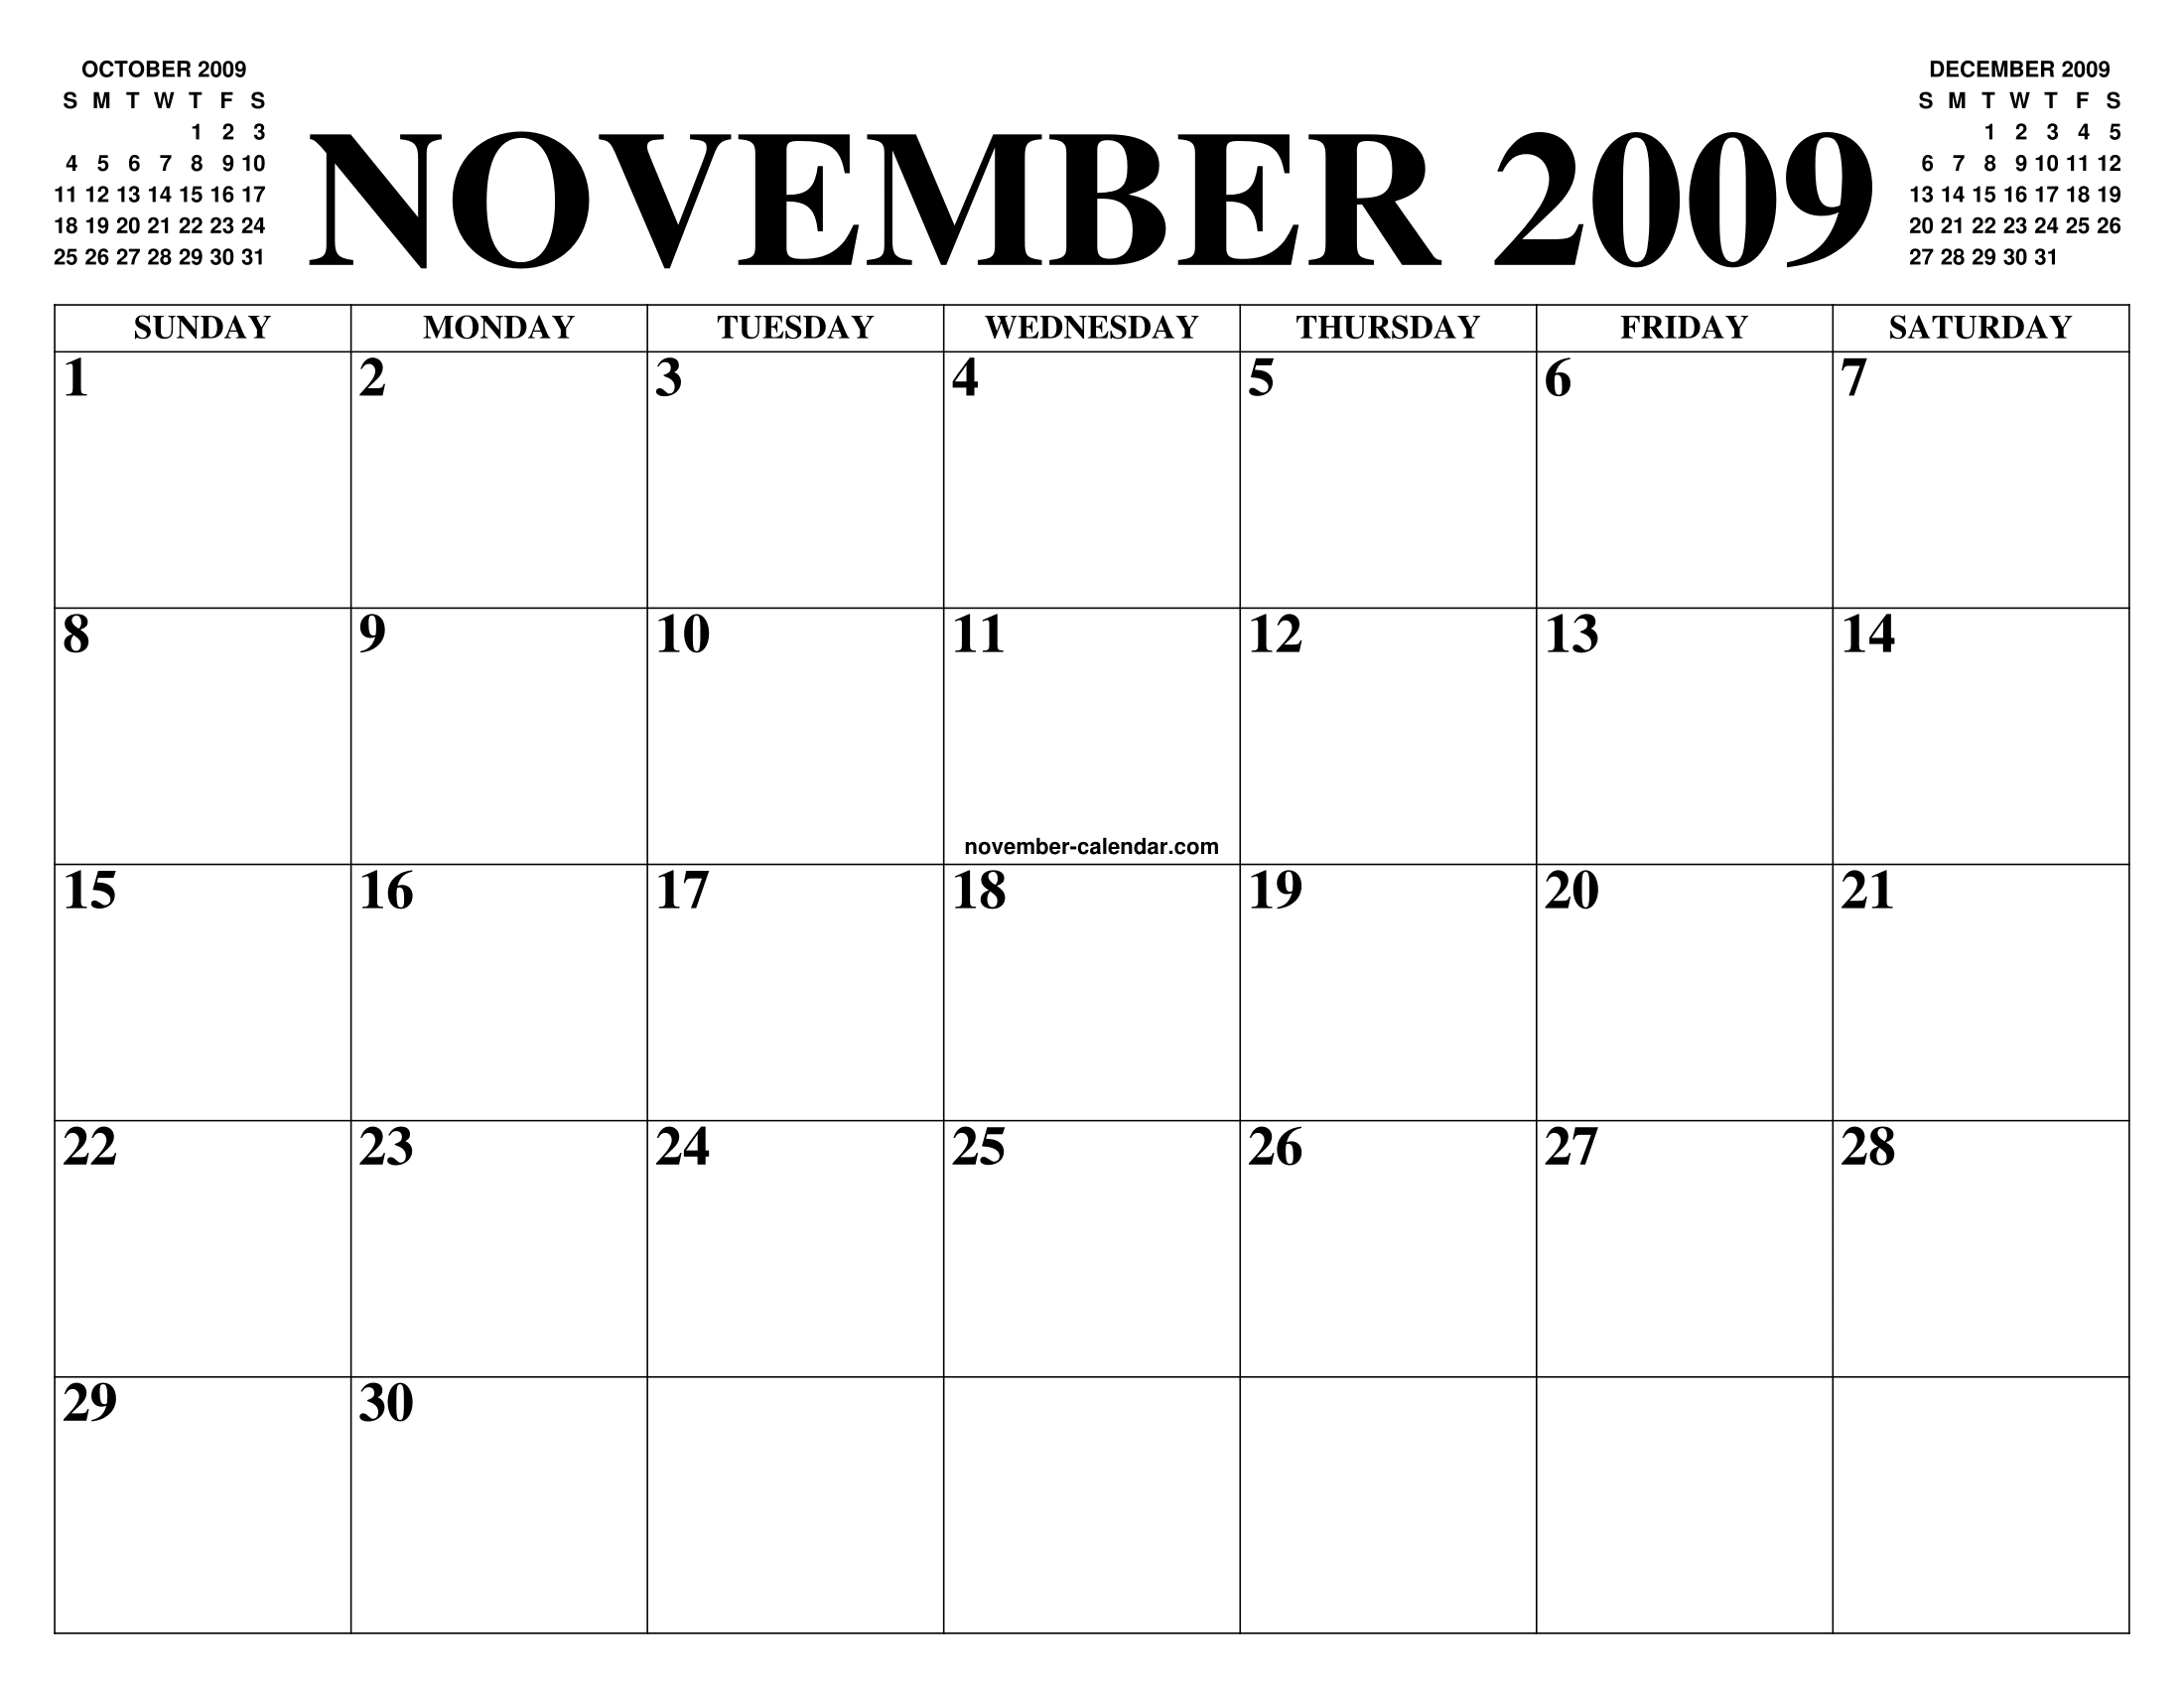 NOVEMBER 2009 CALENDAR OF THE MONTH: FREE PRINTABLE NOVEMBER CALENDAR